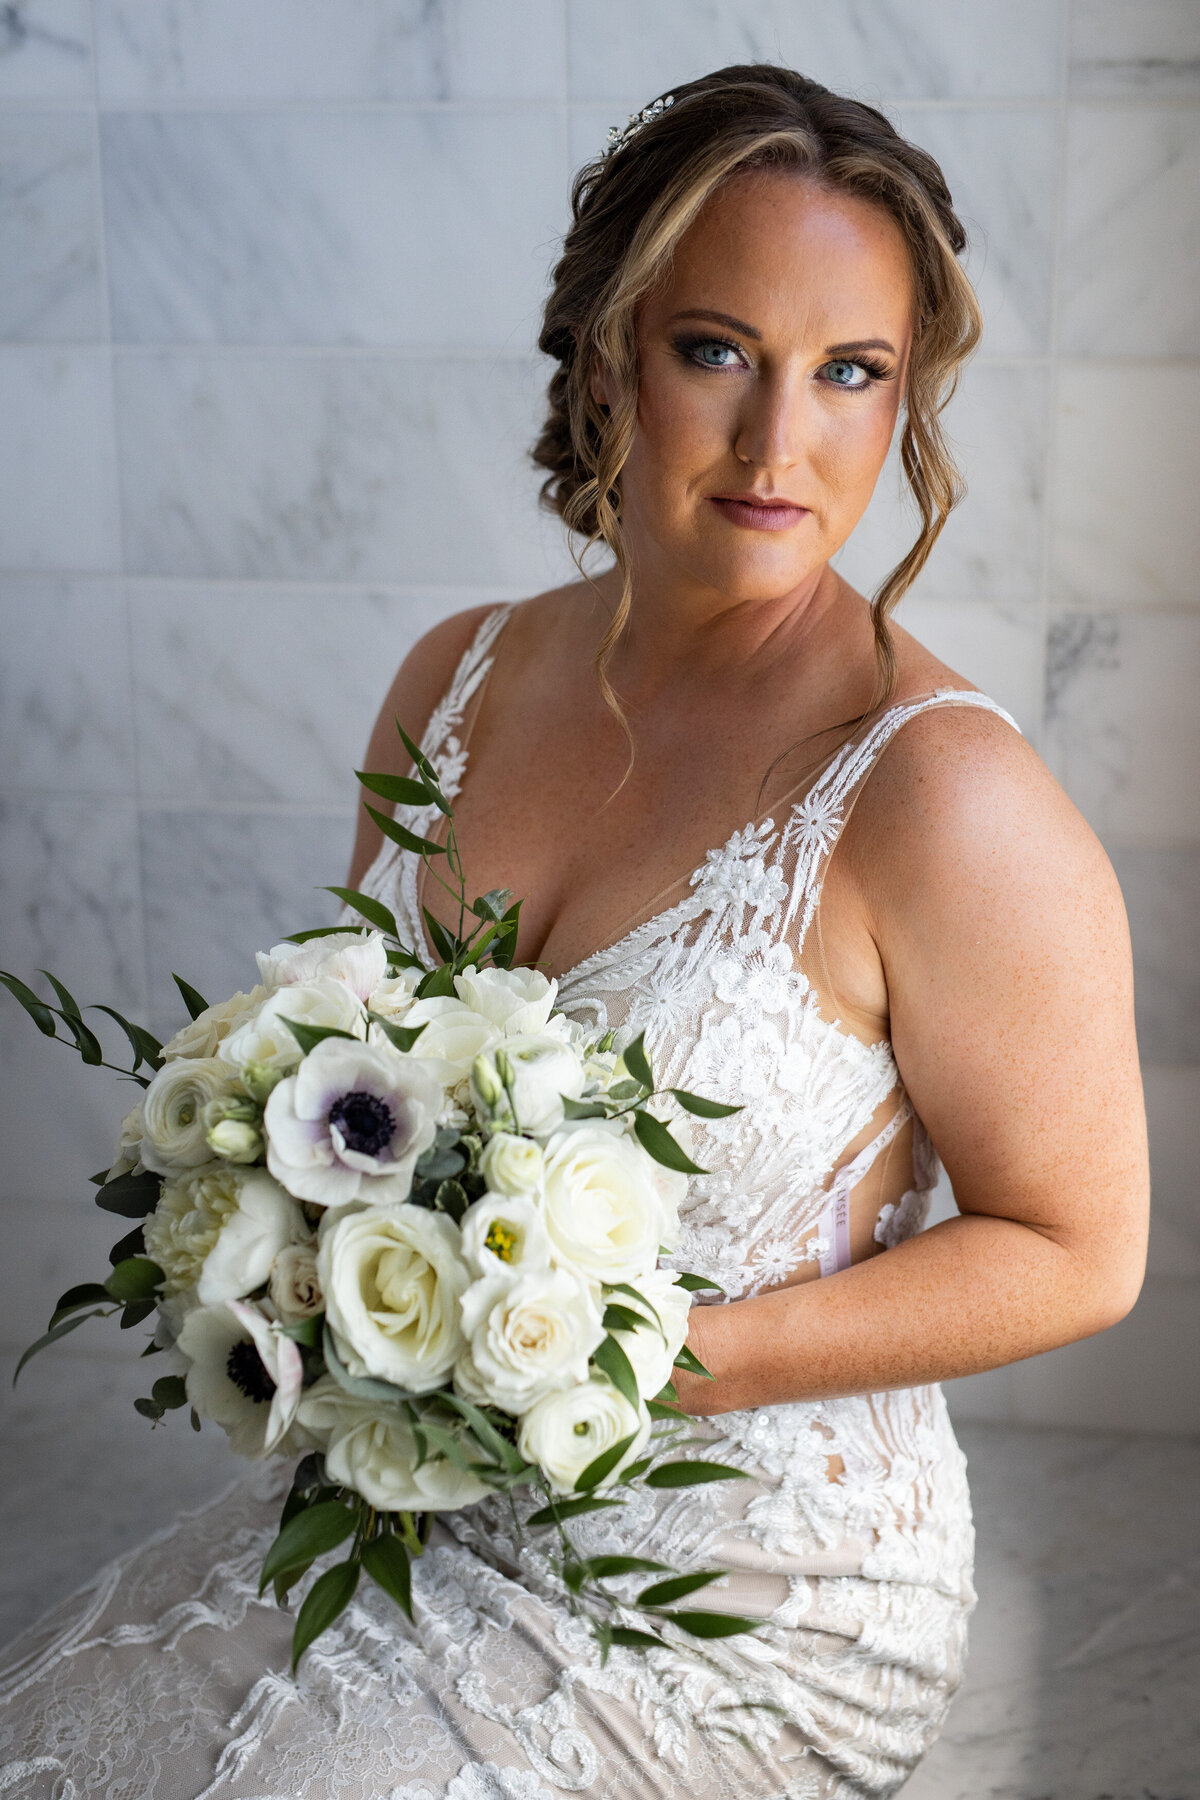 10Intercontinental-Chicago-Hotel-Wedding-Photos-Lauren-Ashlely-Studios